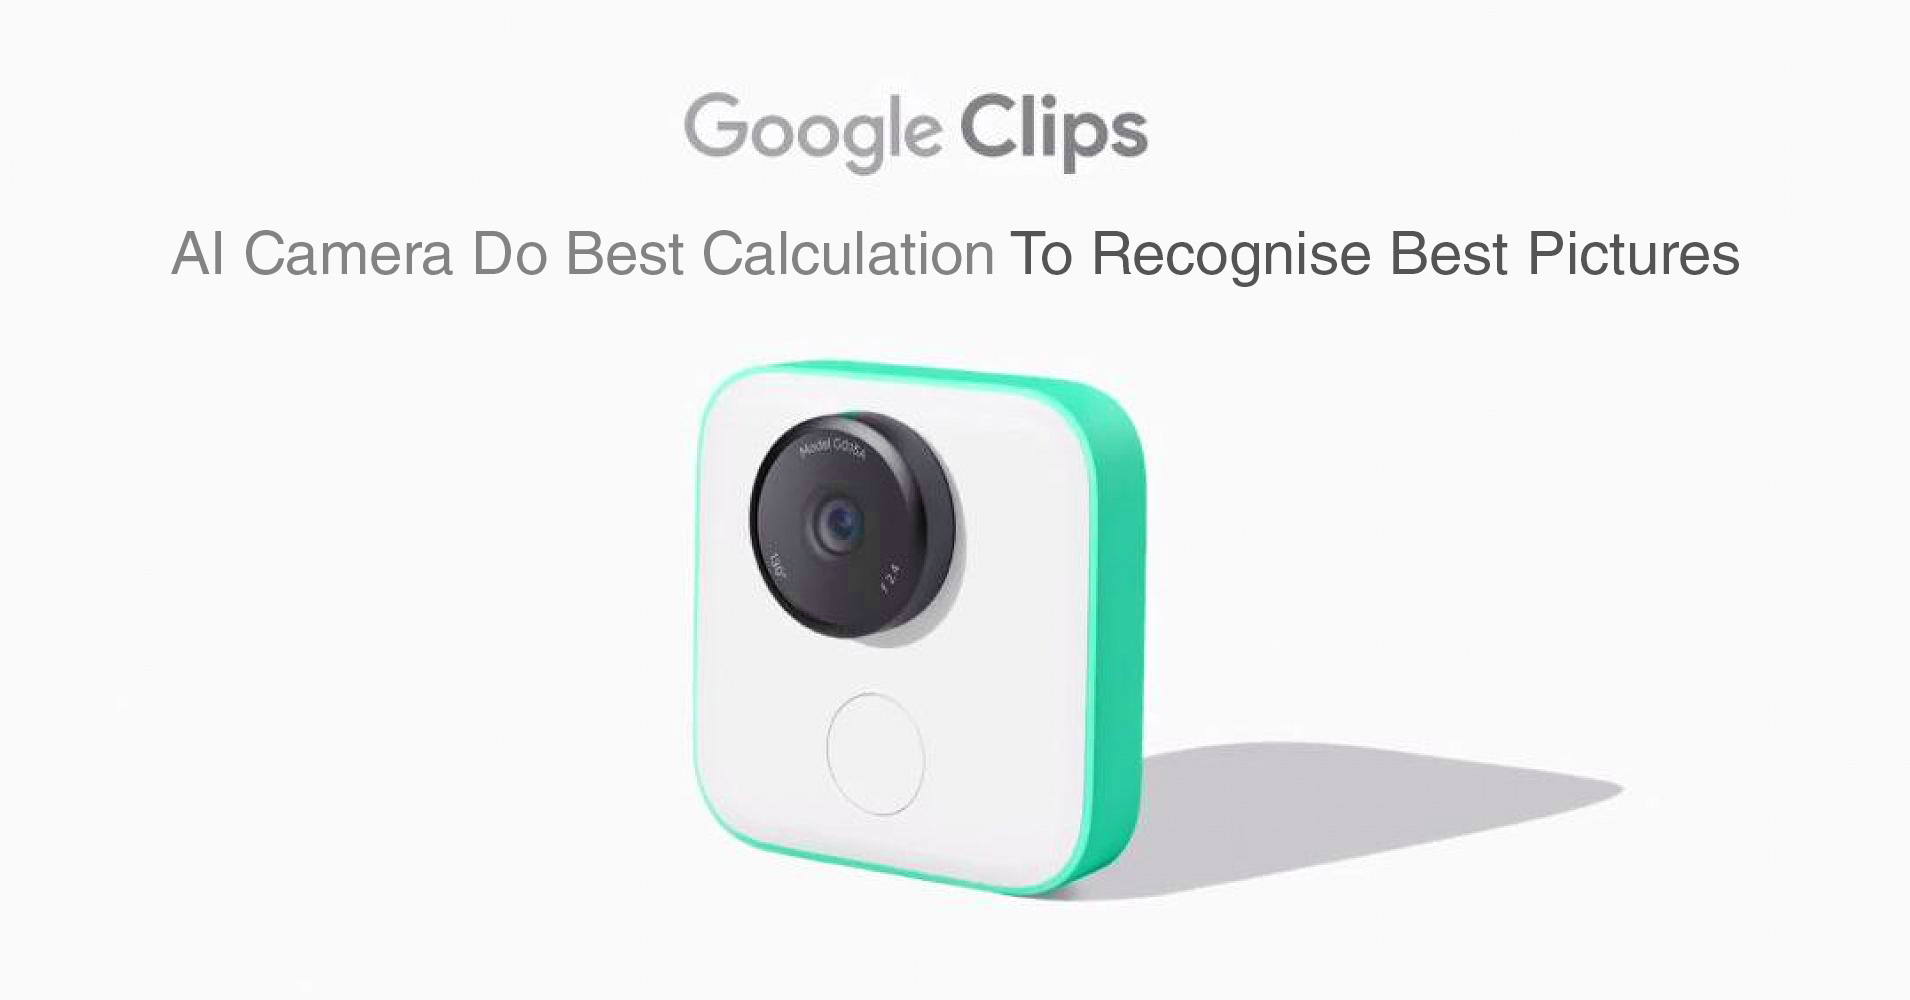 Google Clips AI Camera